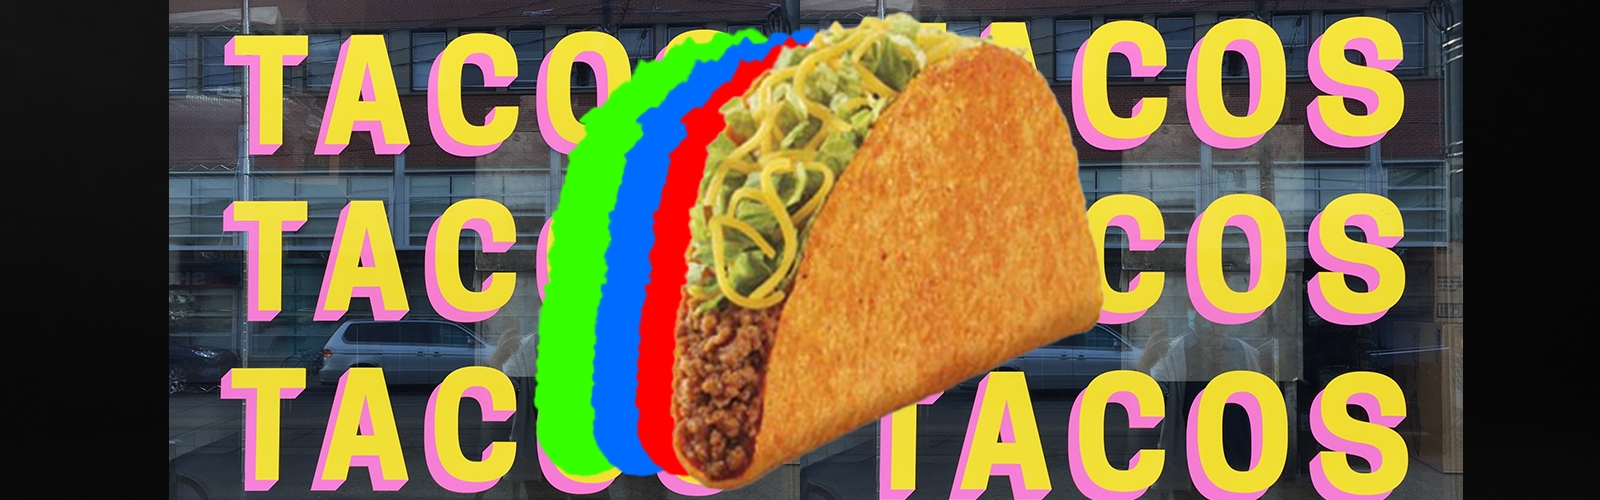 TACO TUESDAY - Taco Bell : Taco Bell